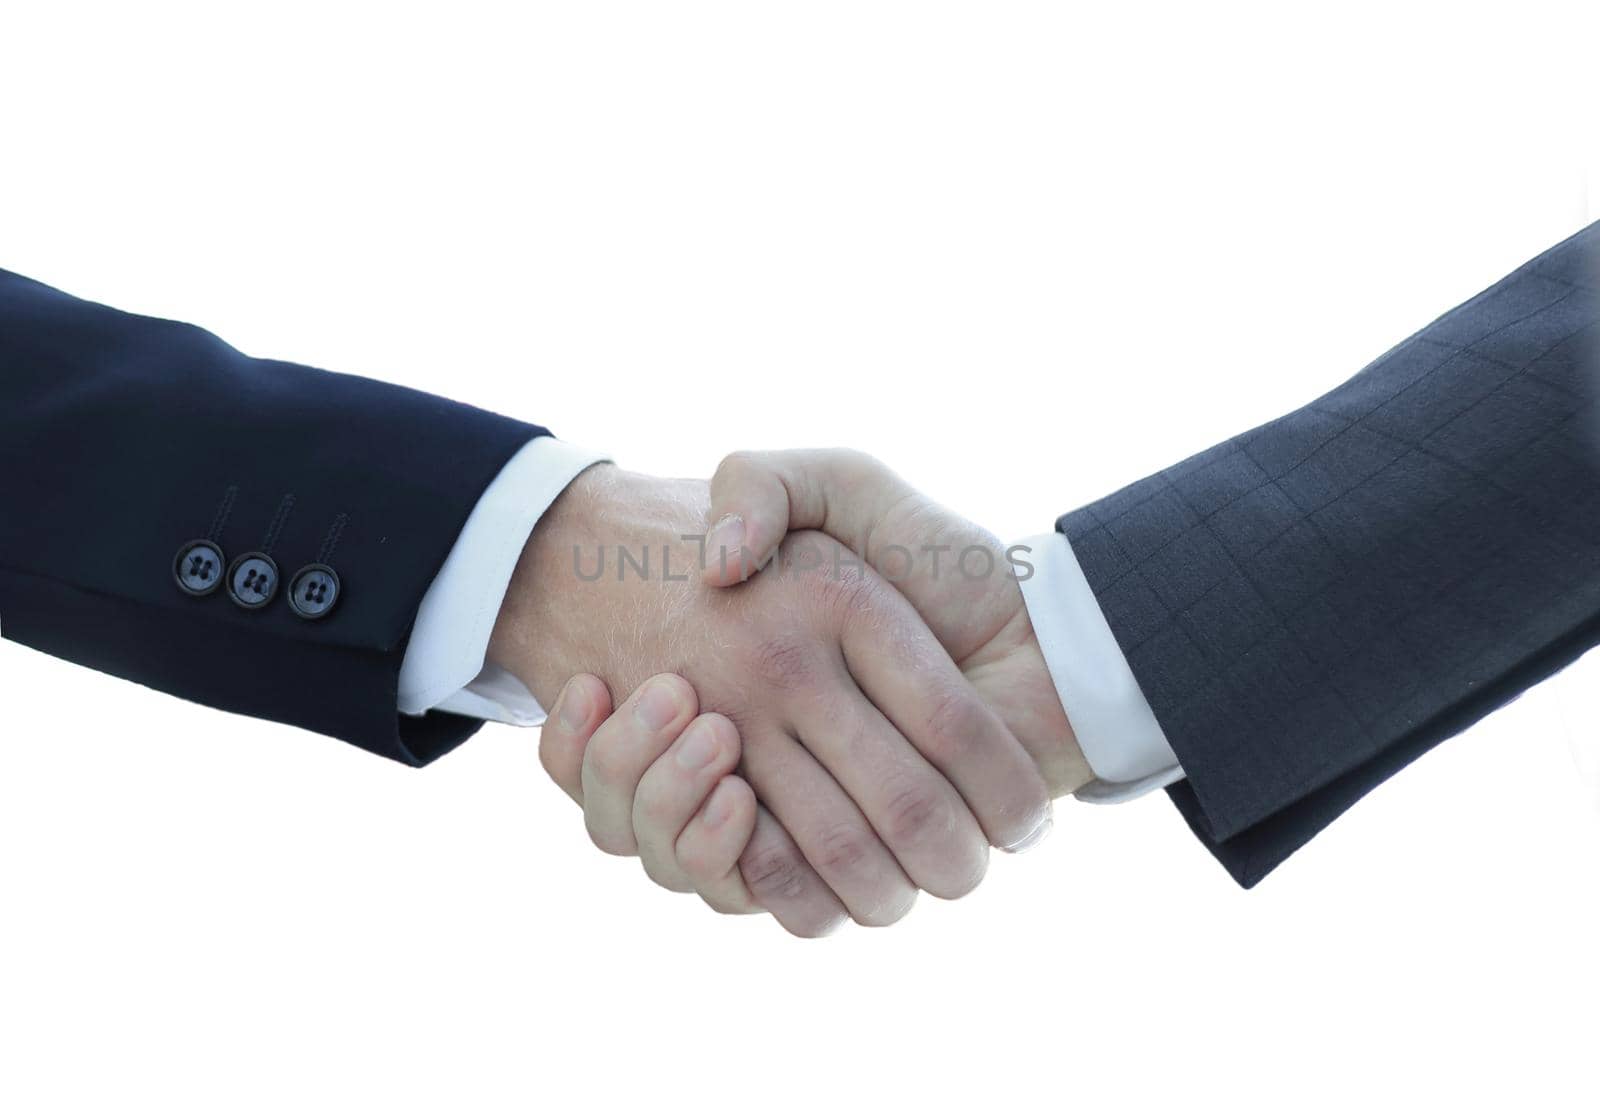 Businessmen handshaking after good deal. Business concept by asdf